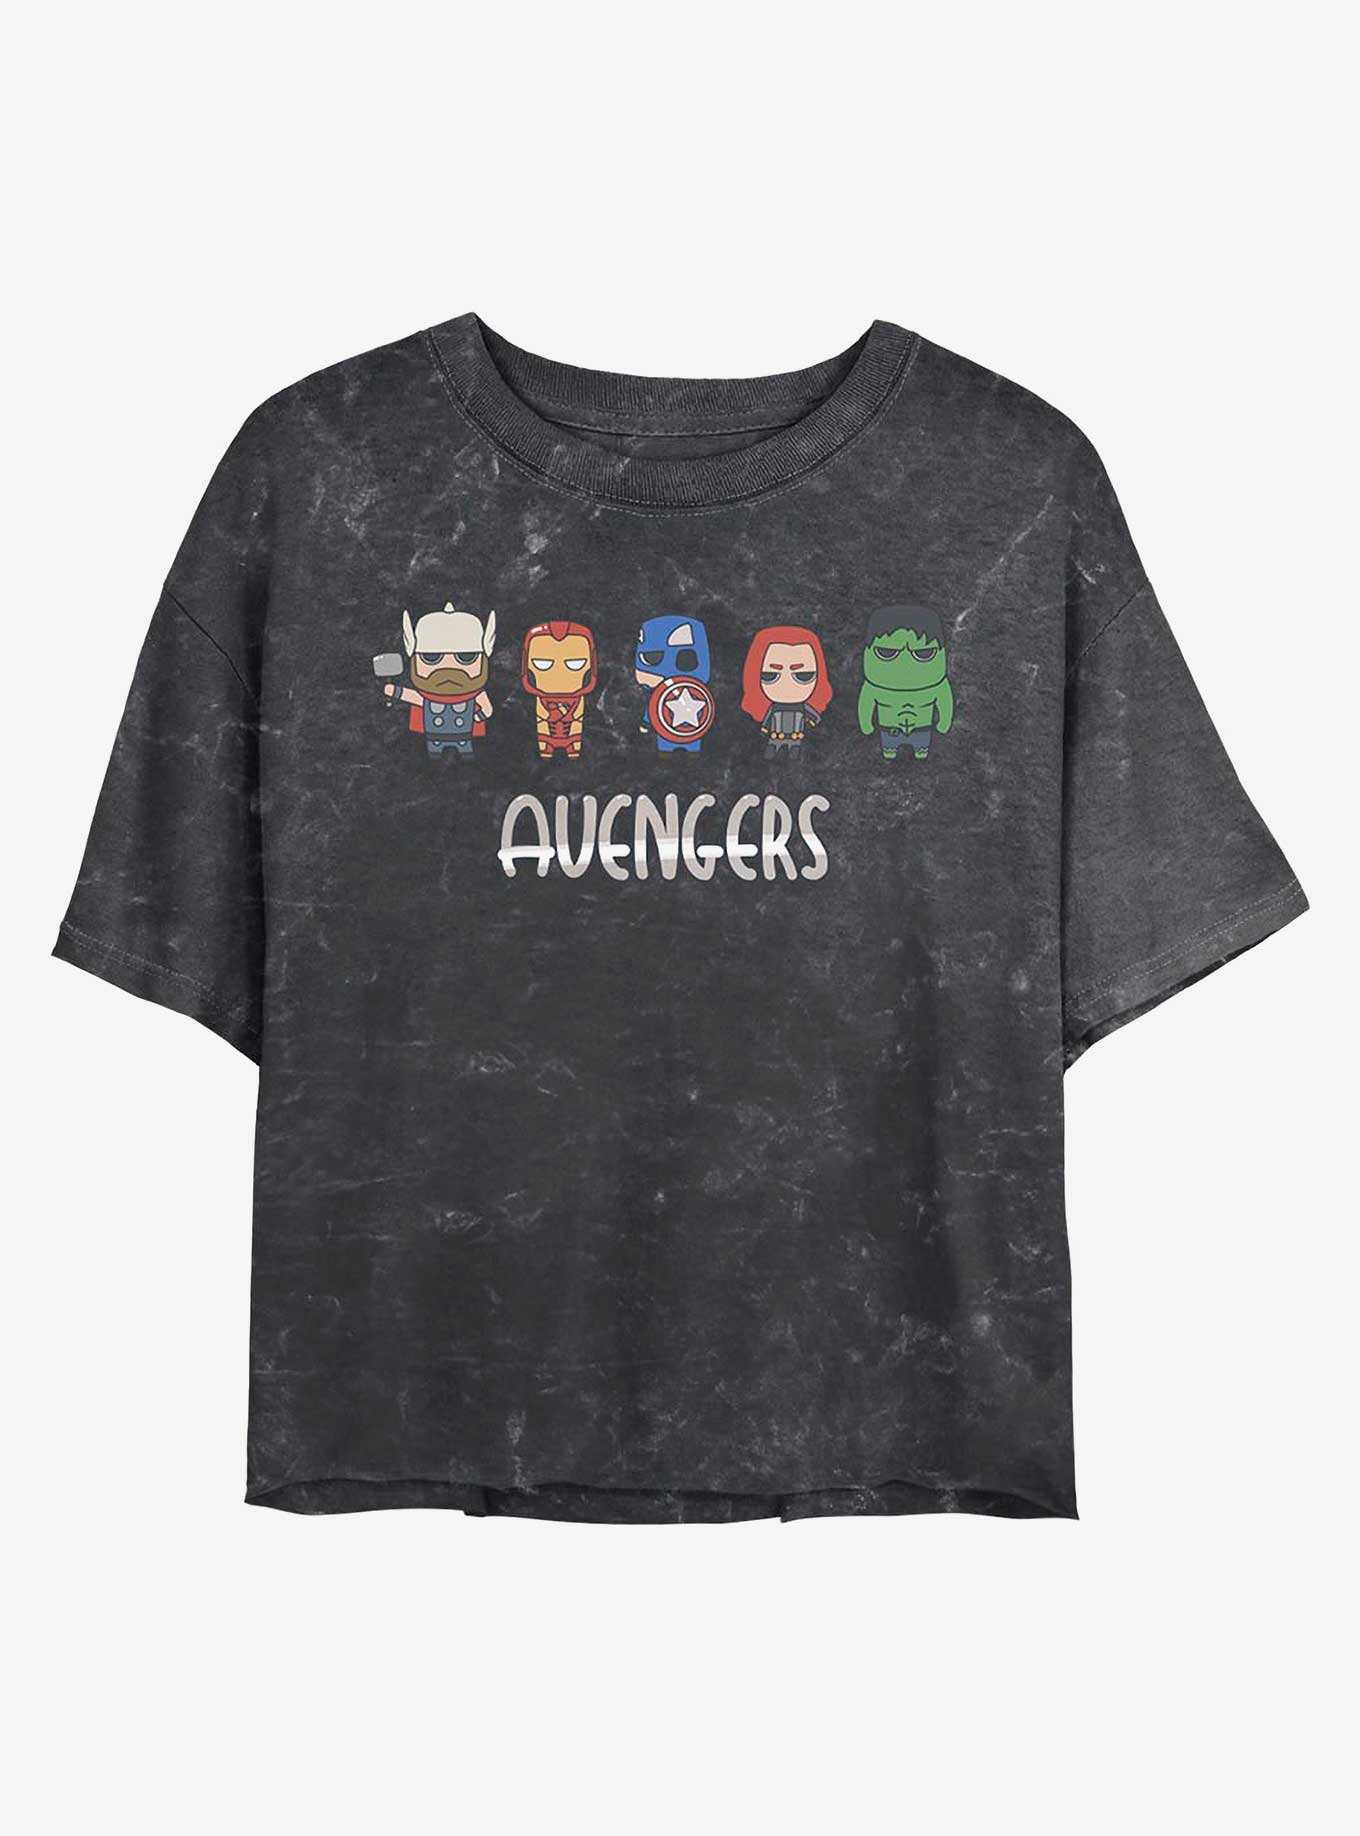 OFFICIAL Avengers Shirts & Merchandise | Her Universe